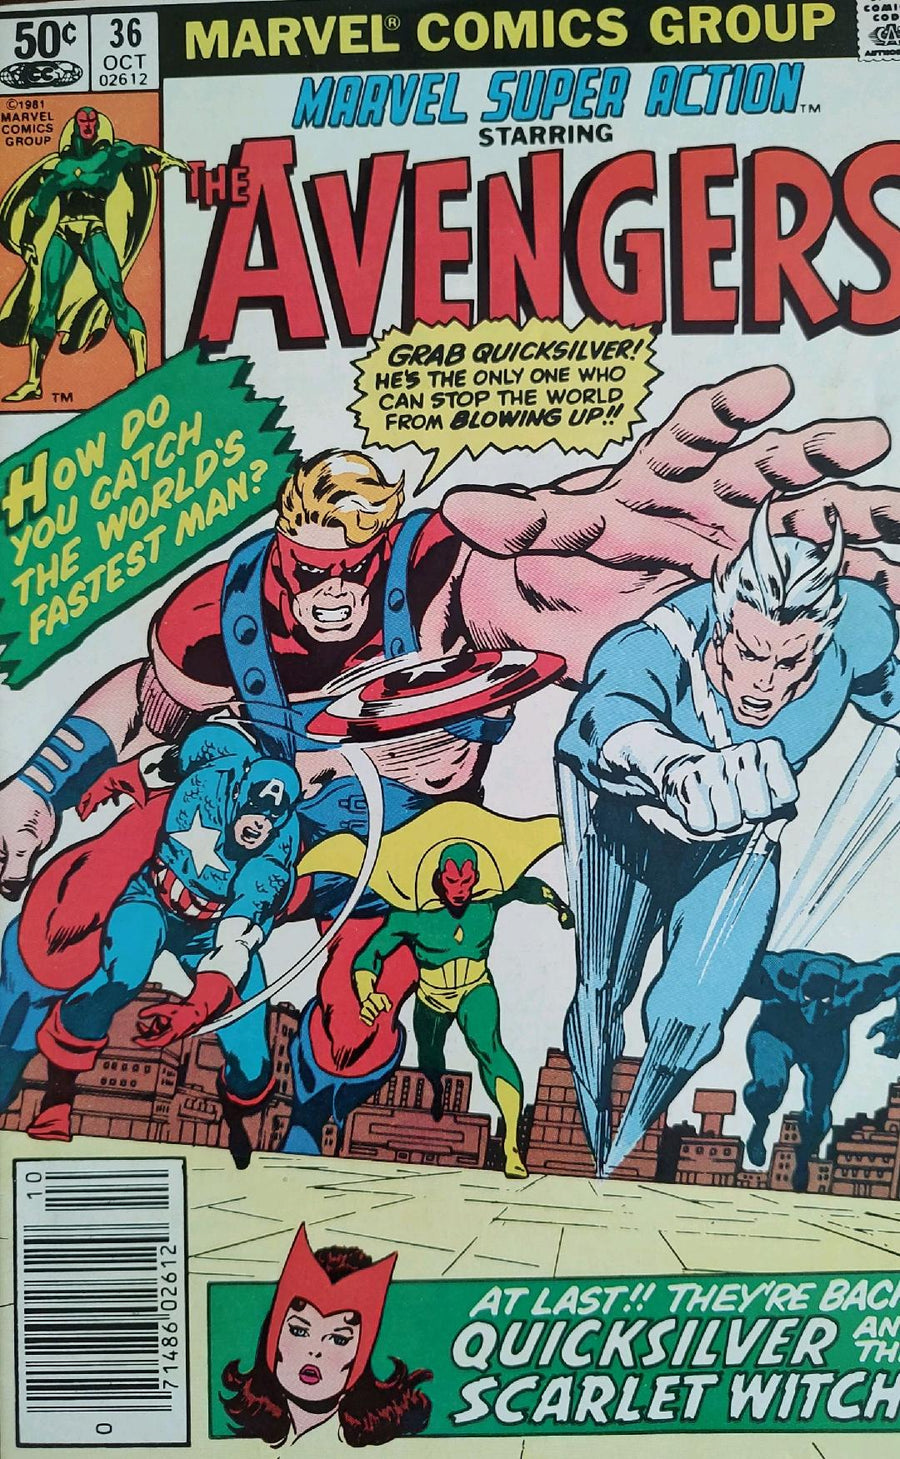 Marvel Super Action #36 Comic Book